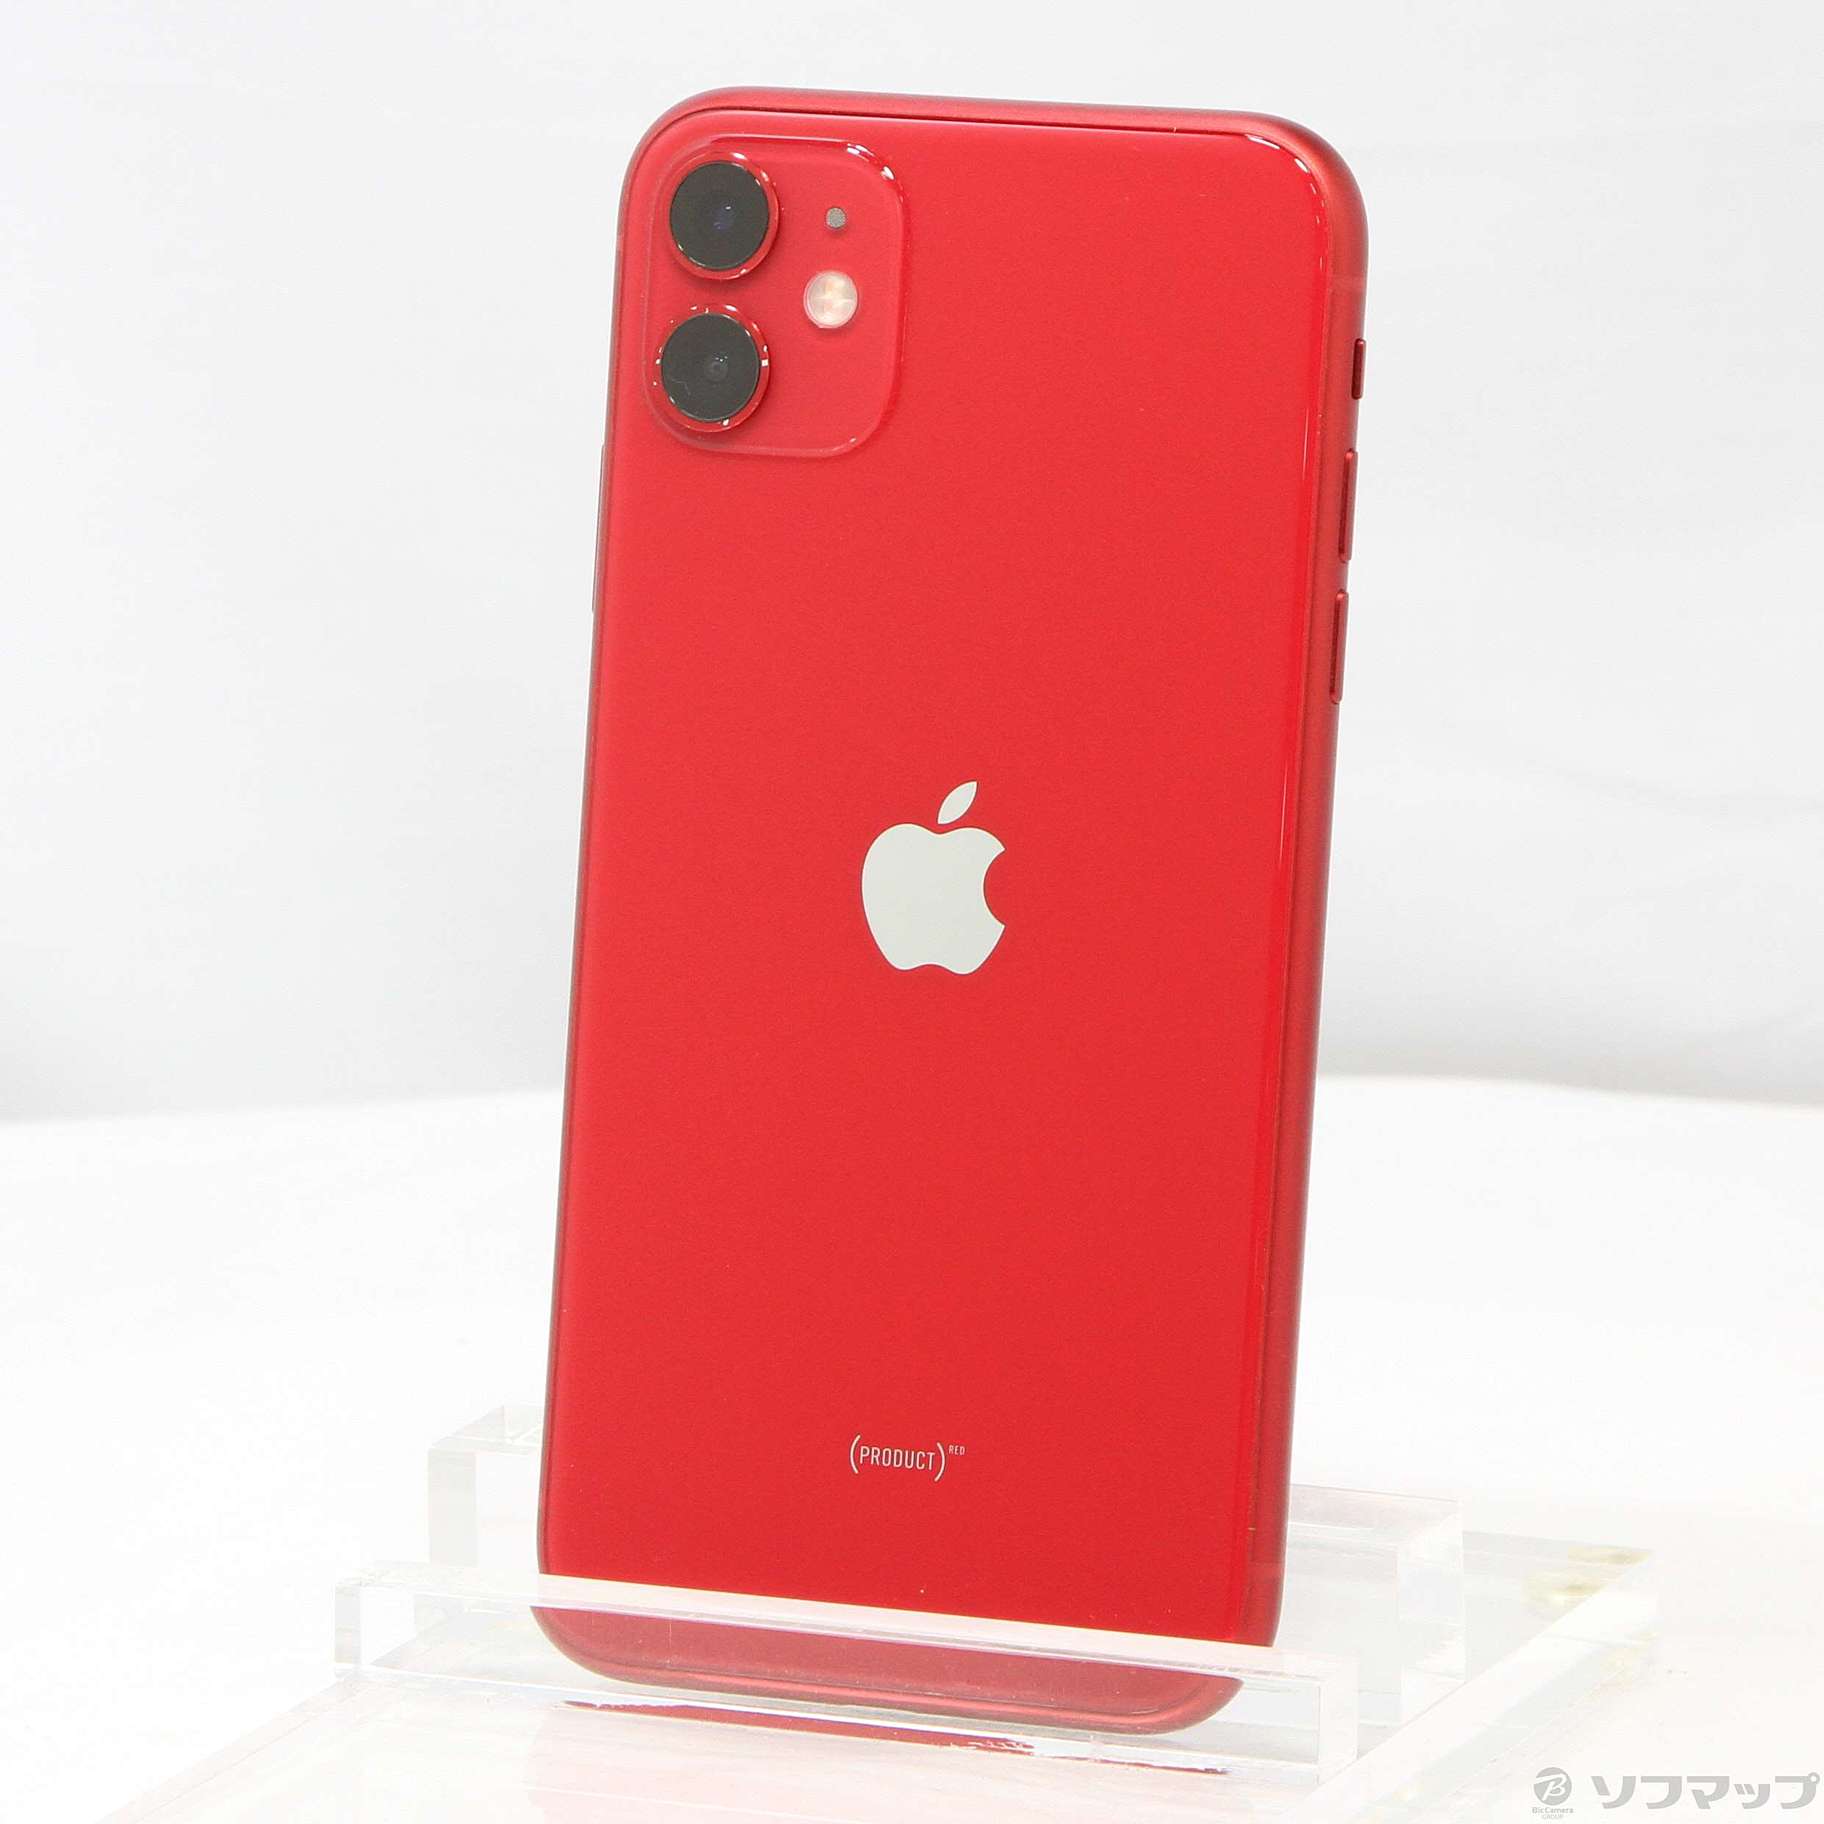 iPhone 11 (PRODUCT)RED 128 GB Softbank容量128GB - www